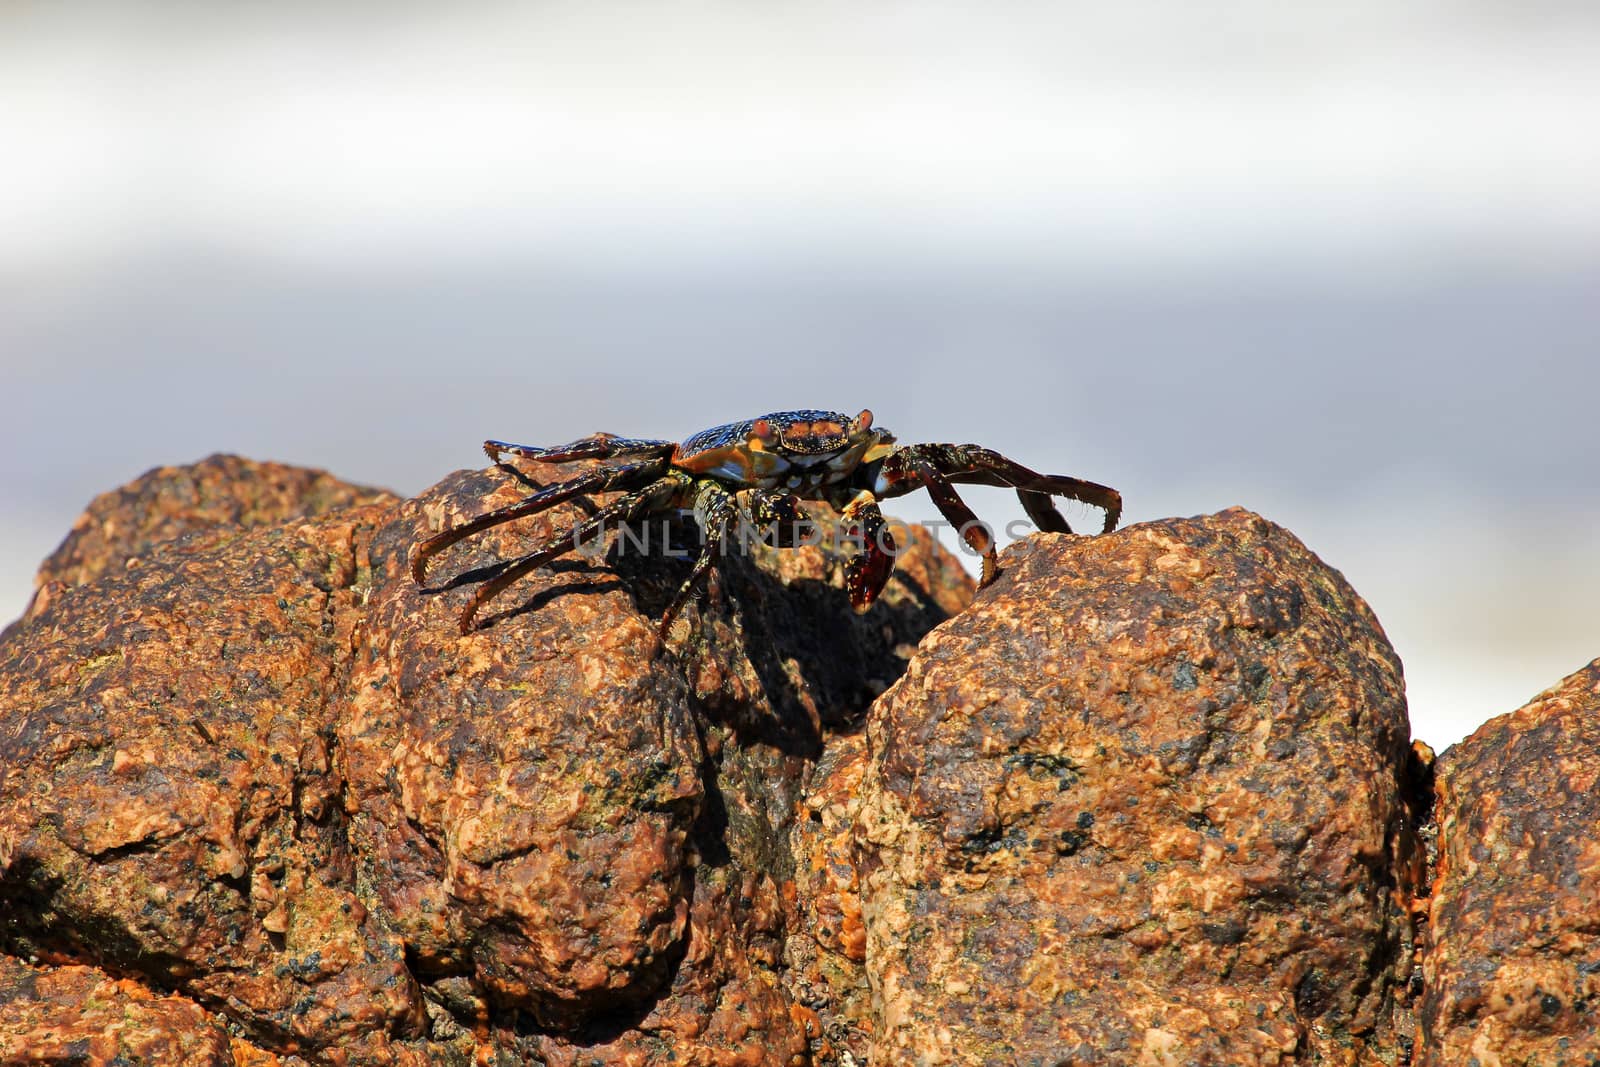 Sally Lightfoot Crab on rocks by cicloco